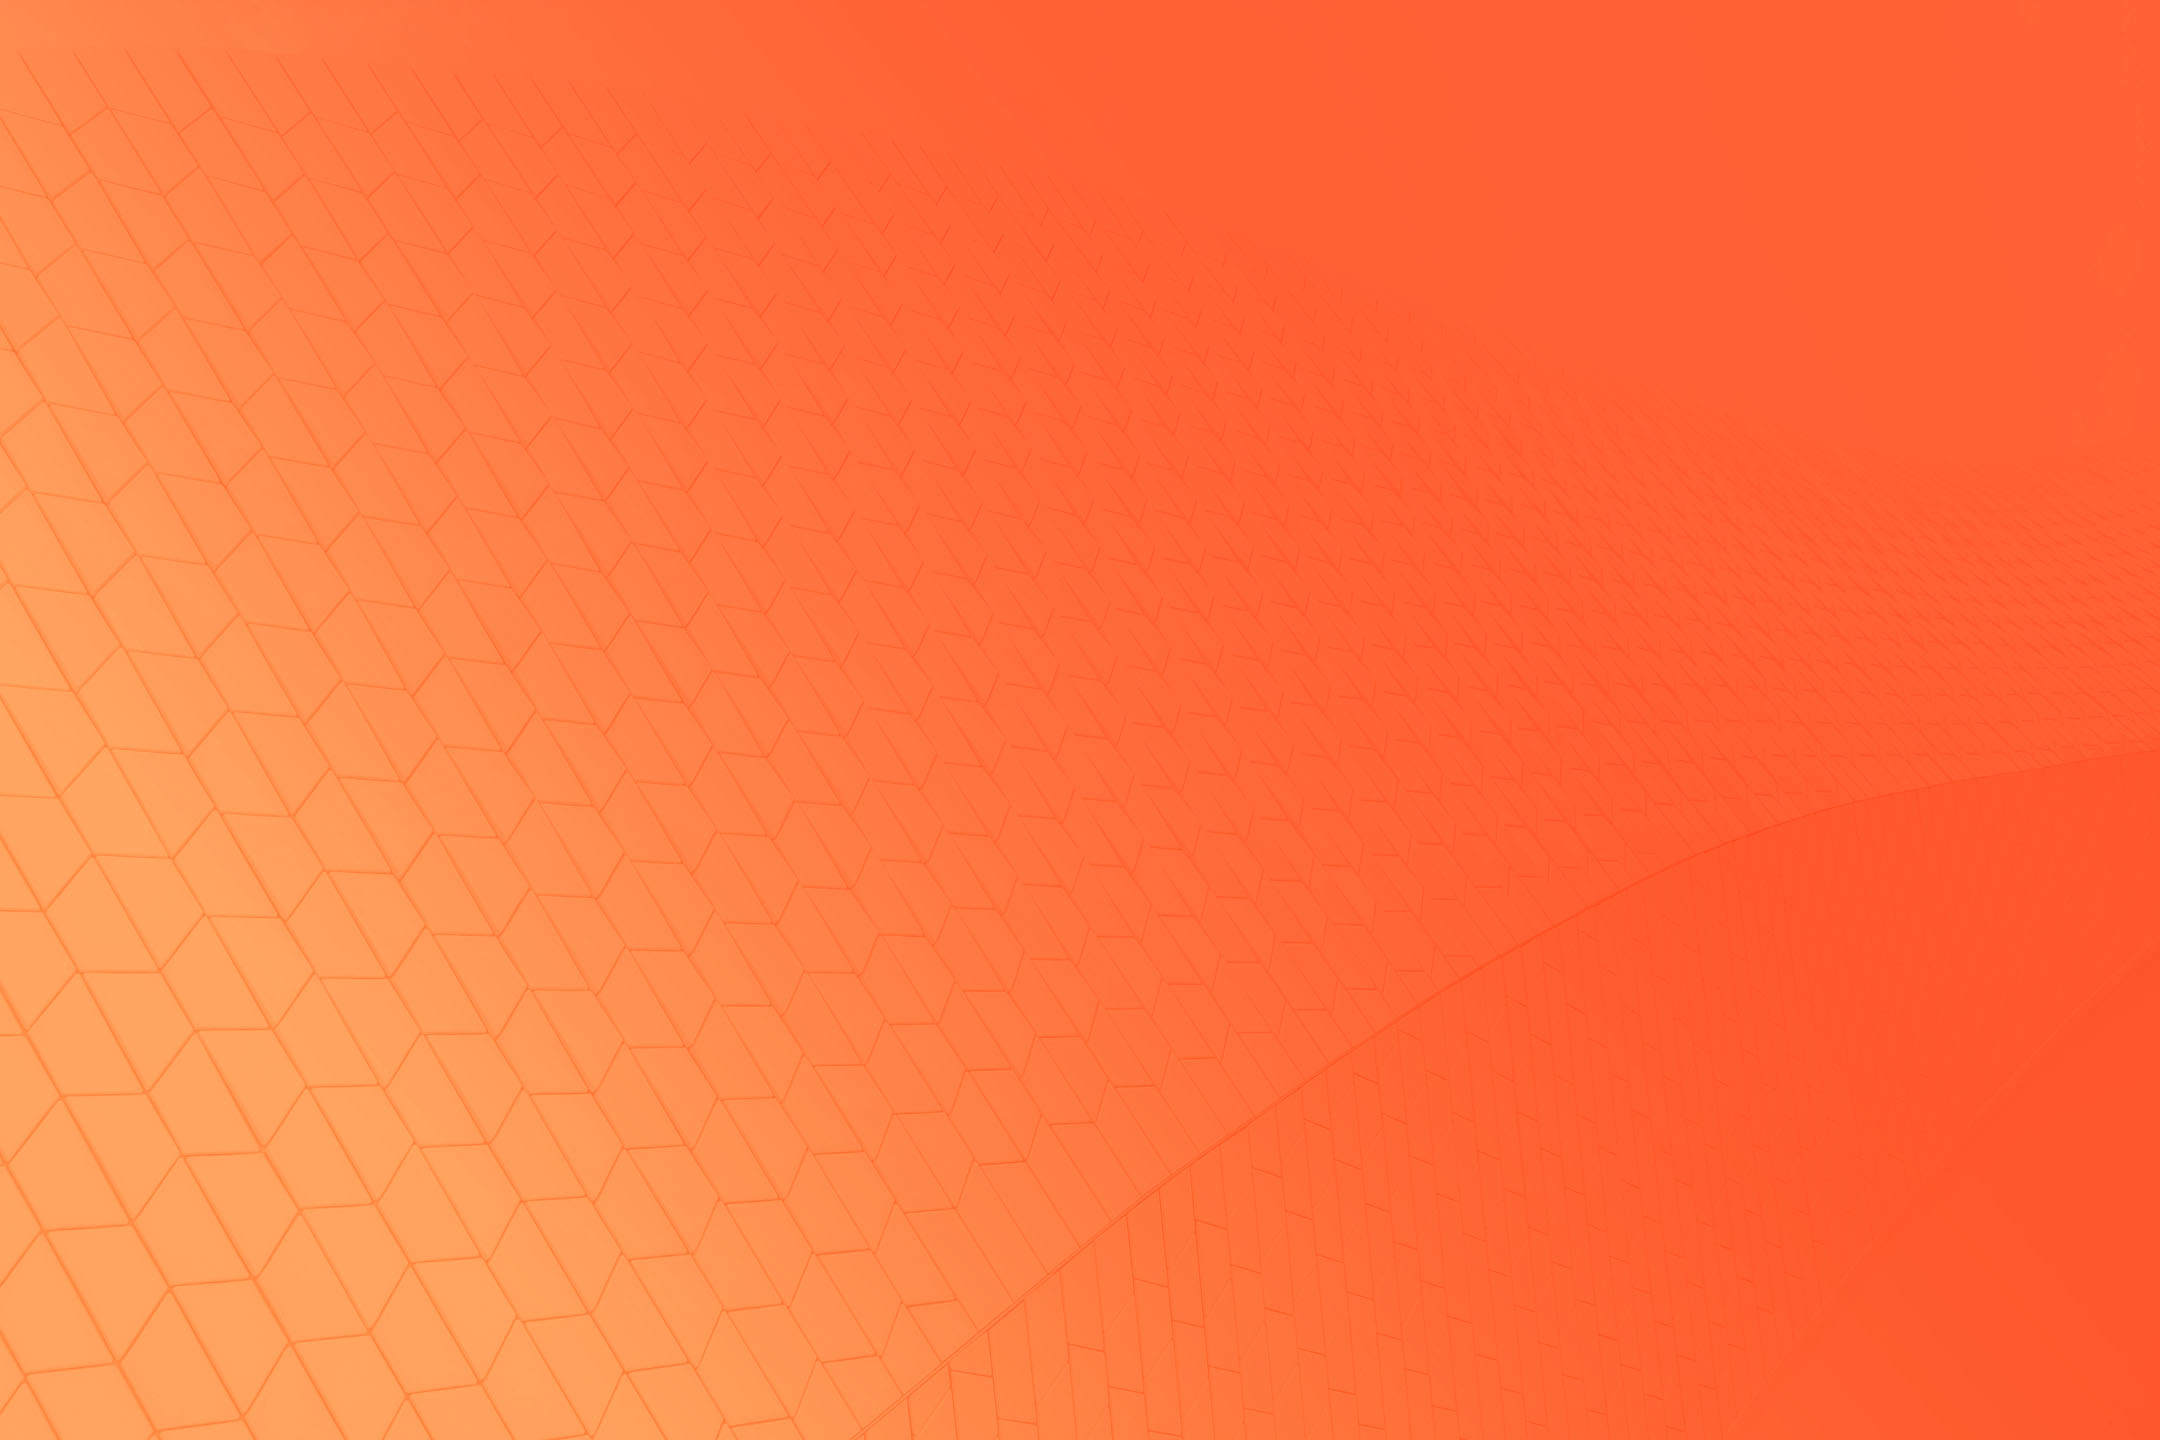 Orange herringbone-styled abstract background with gradient